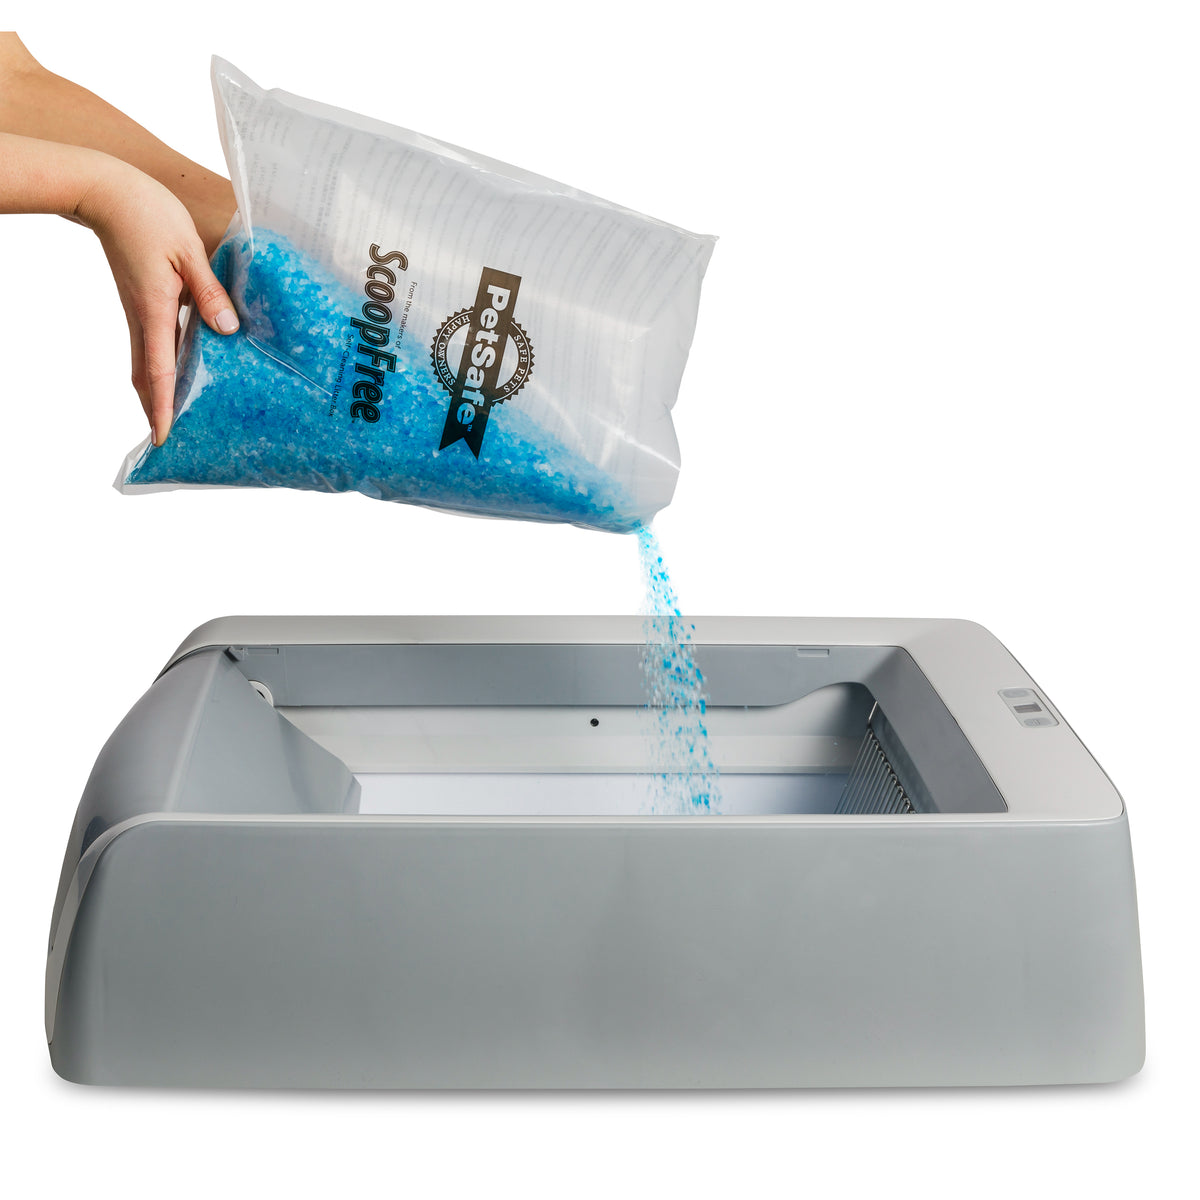 PetSafe ScoopFree Self-Cleaning Litter Box, Second Generation